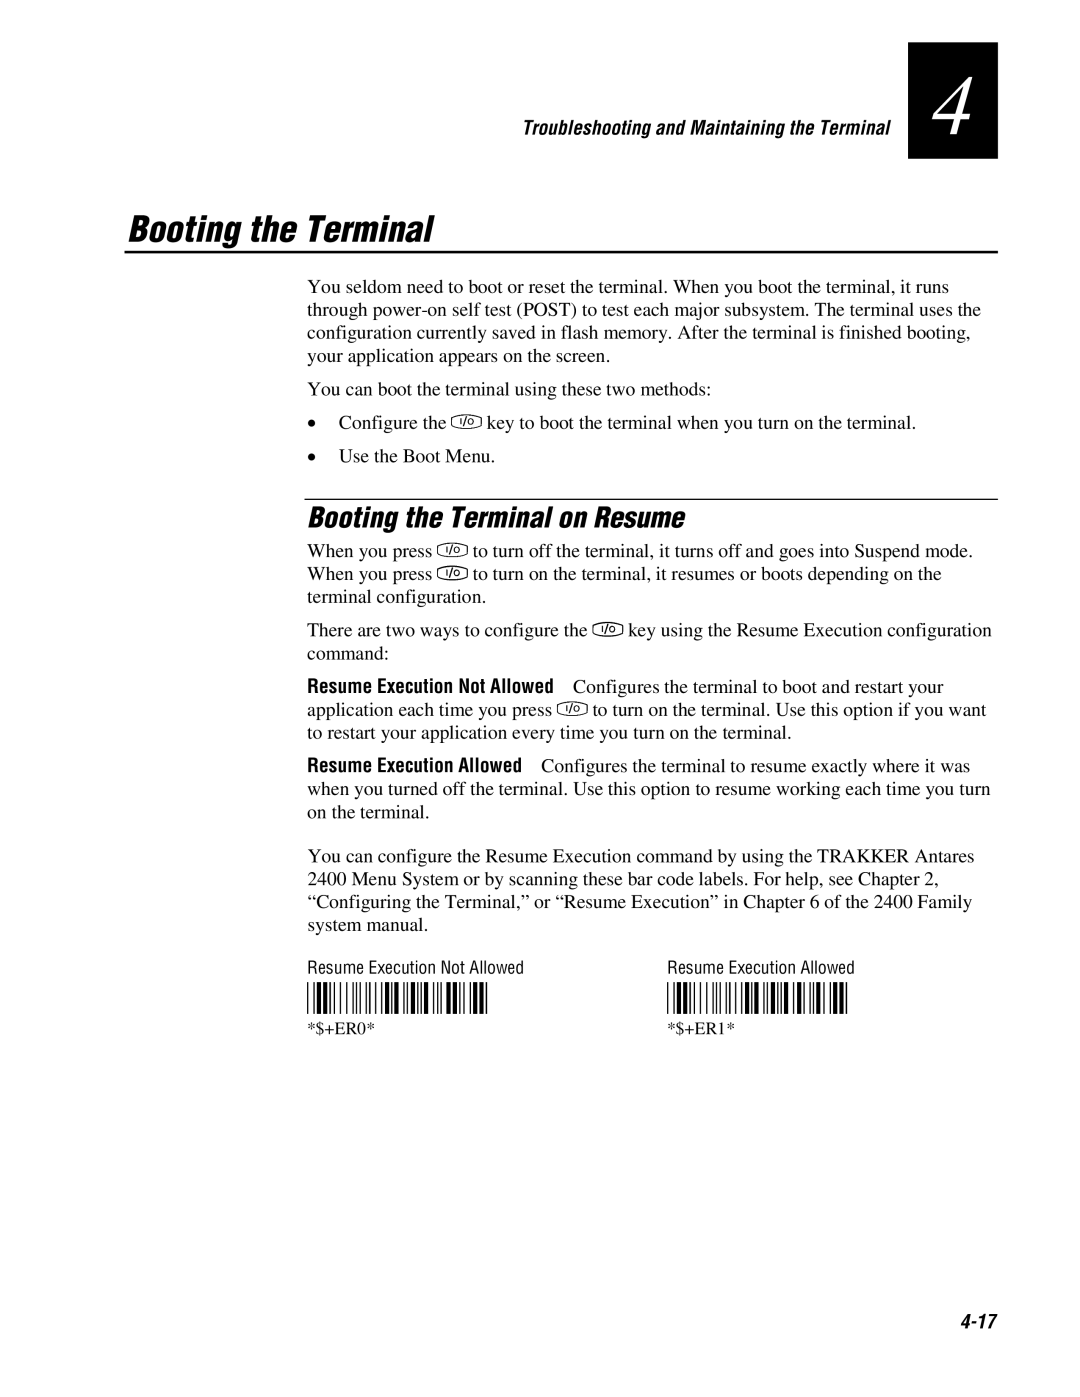 IBM 243X user manual $+ER0, $+ER1, Booting the Terminal on Resume, 4-17 